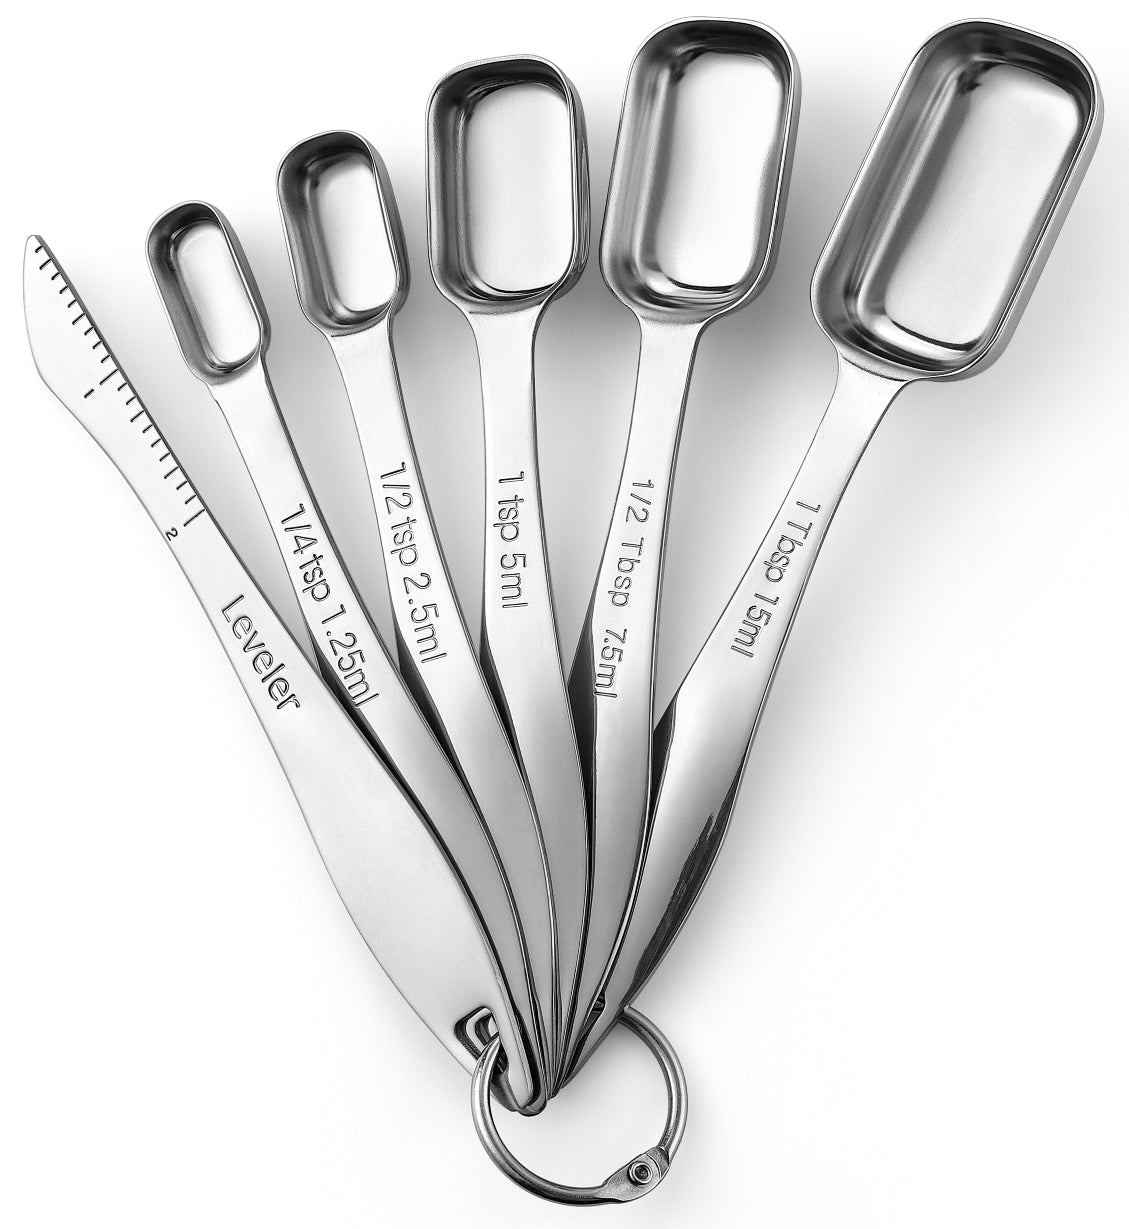 Stainless Steel Measuring Spoons Set